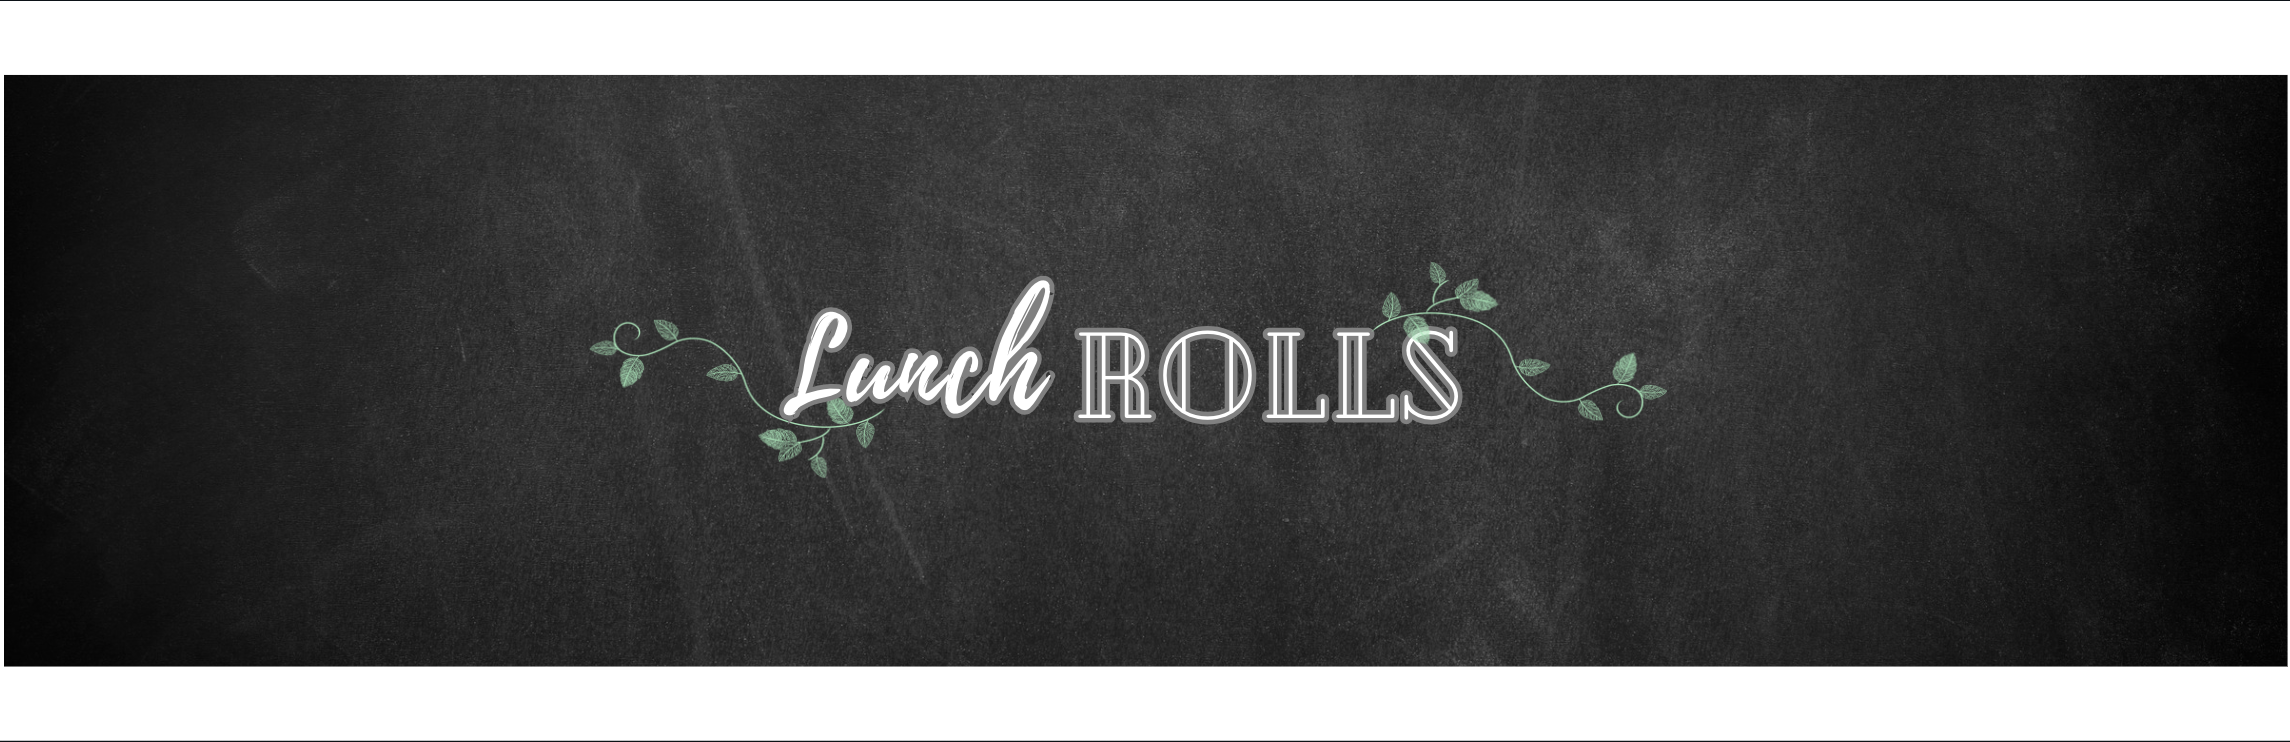 lunch rolls